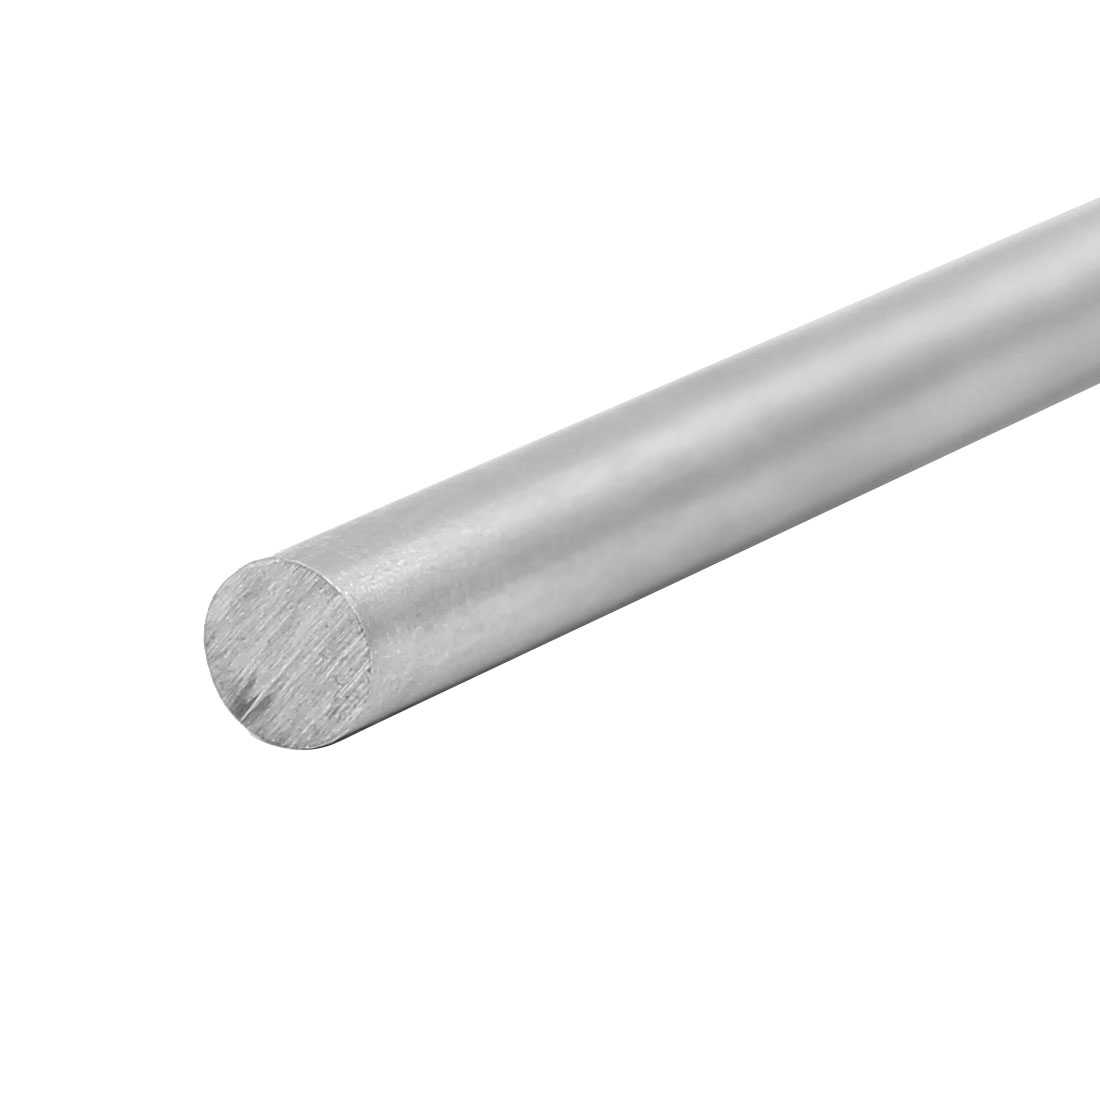 3.5mm Dia 200mm Length HSS Round Shaft Rod Bar Lathe Tools Gray